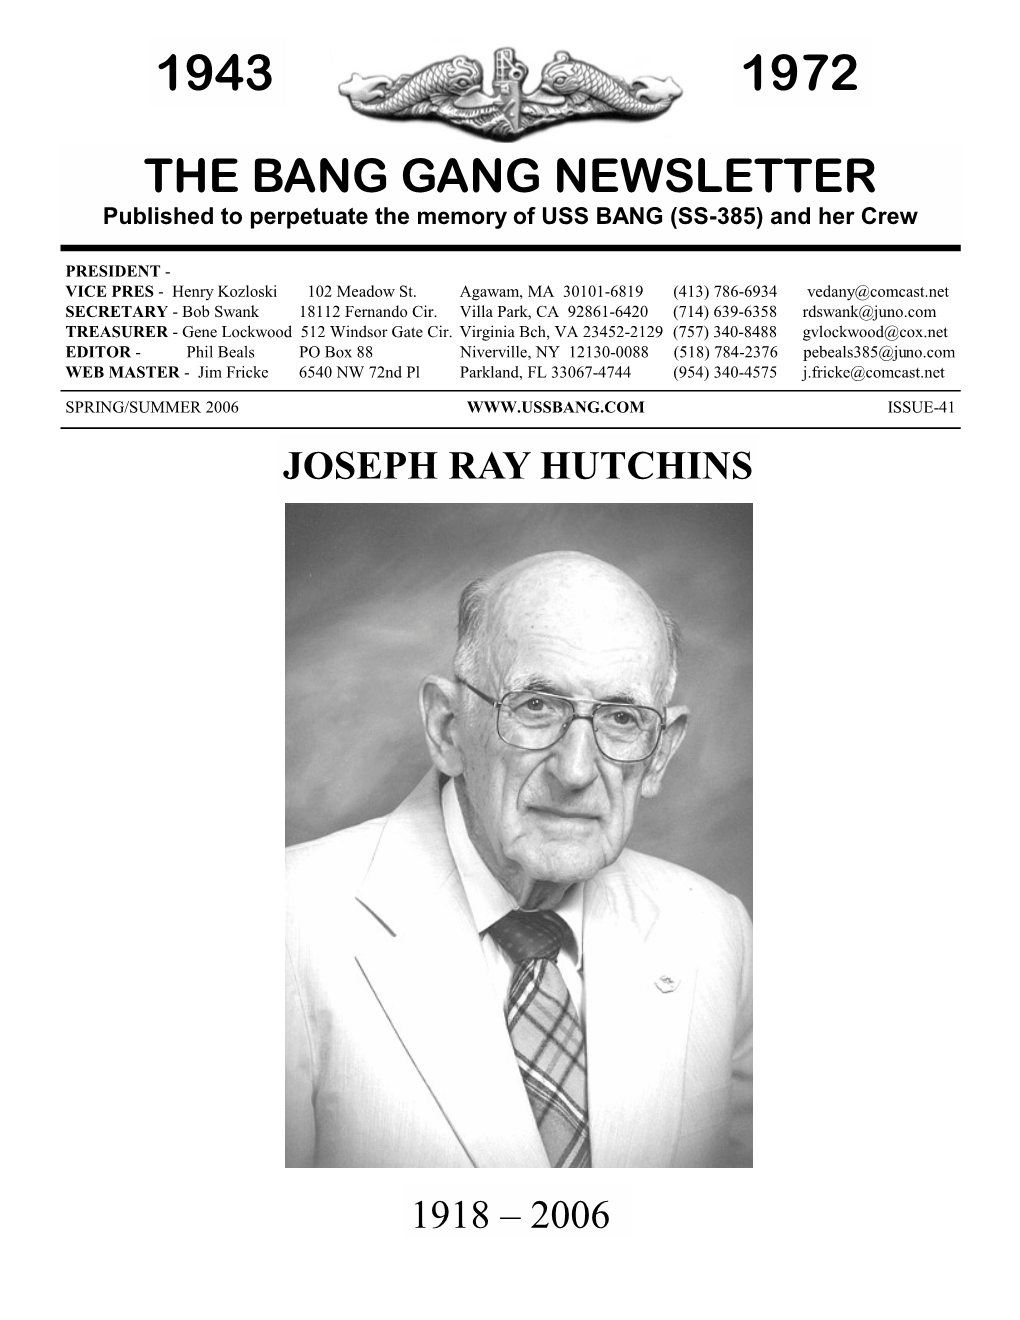 Spring/Summer 2006 Issue-41 Joseph Ray Hutchins